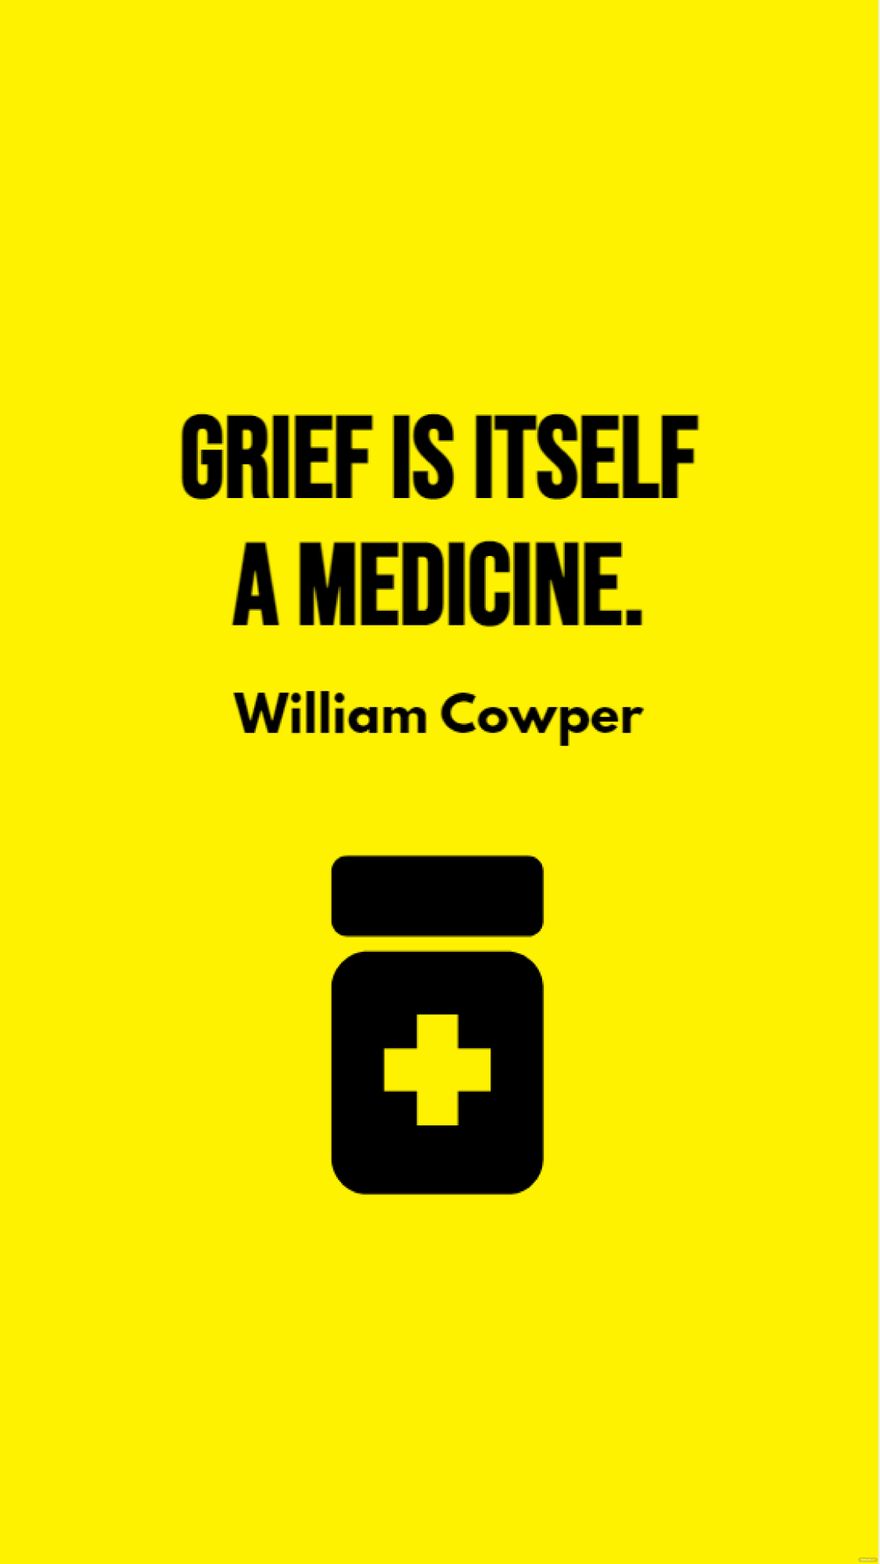 Free William Cowper - Grief is itself a medicine. in JPG